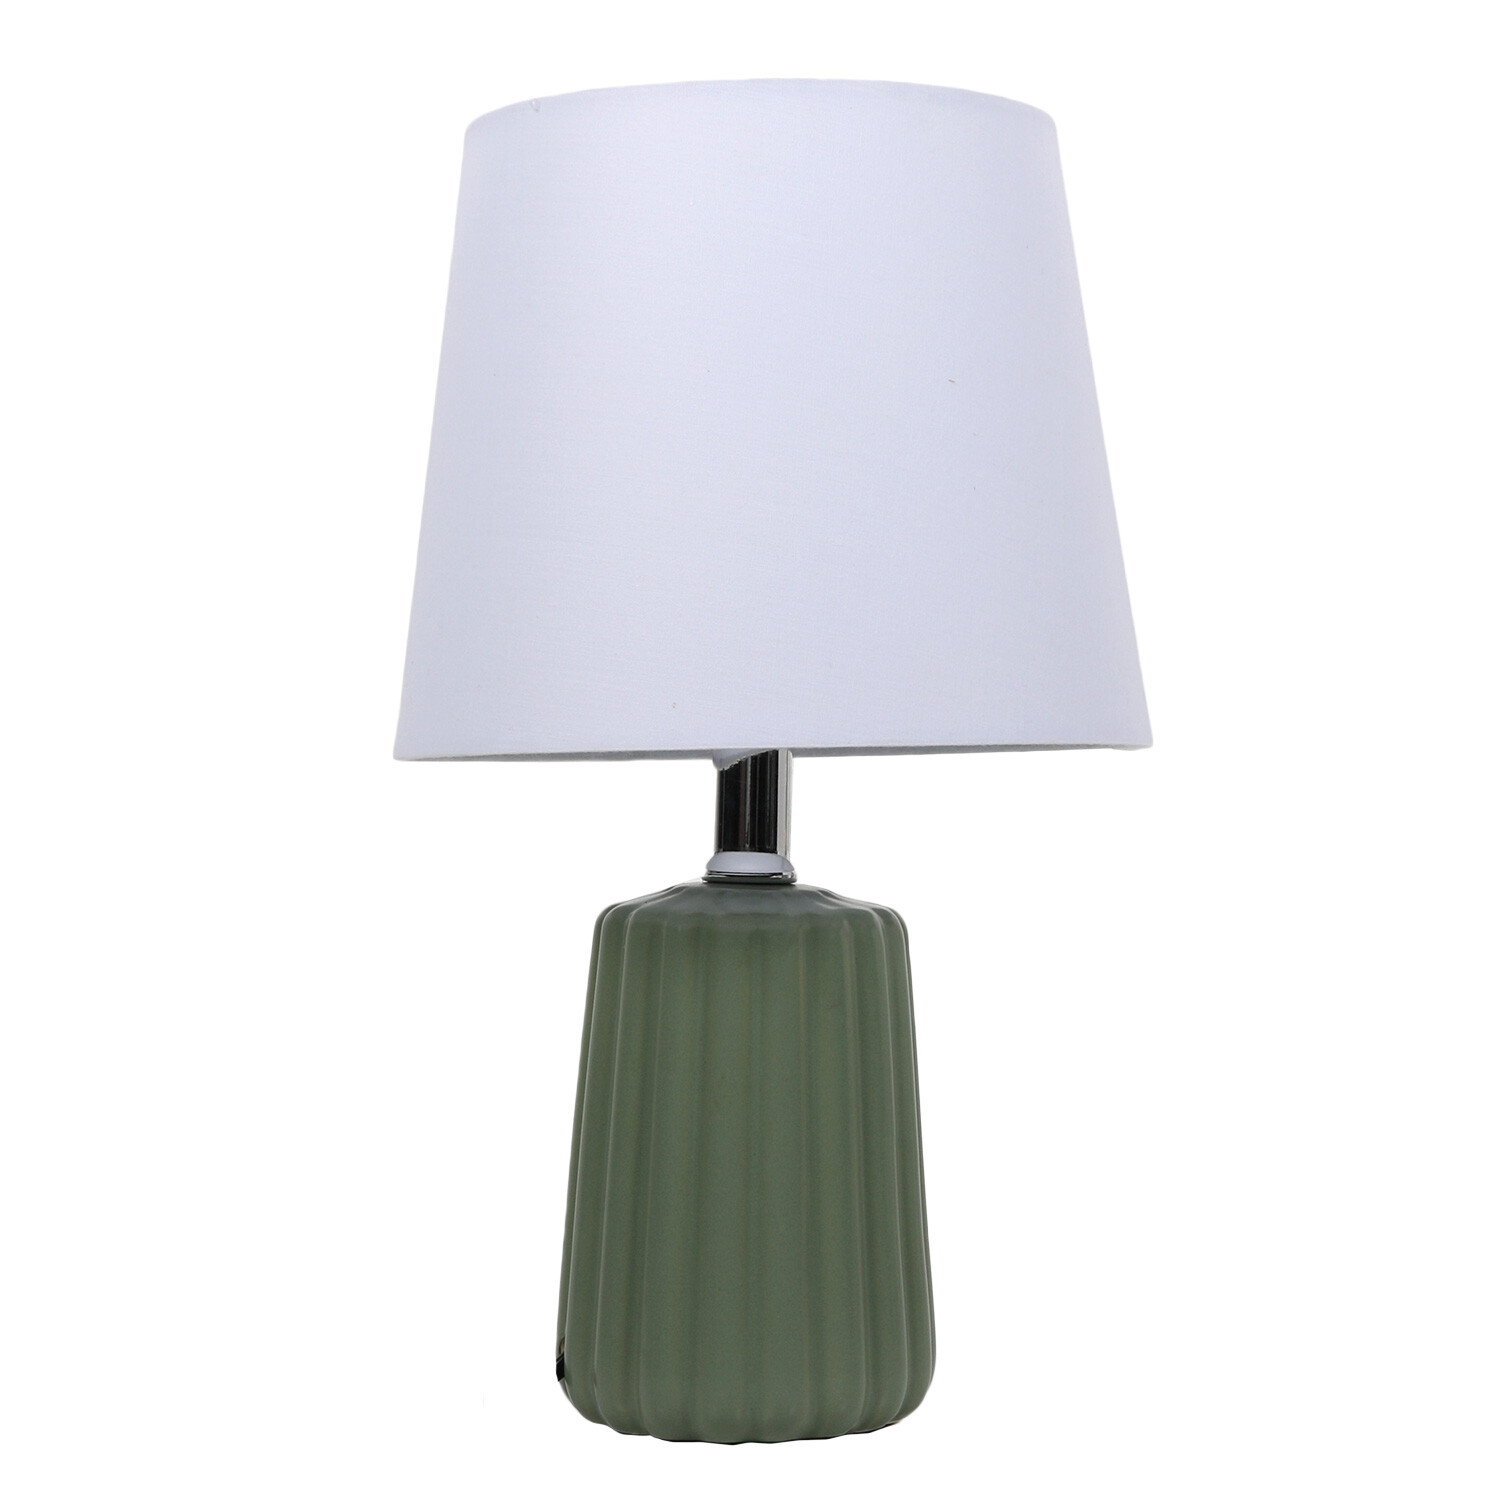 Caleb Table Lamp - Green Image 1